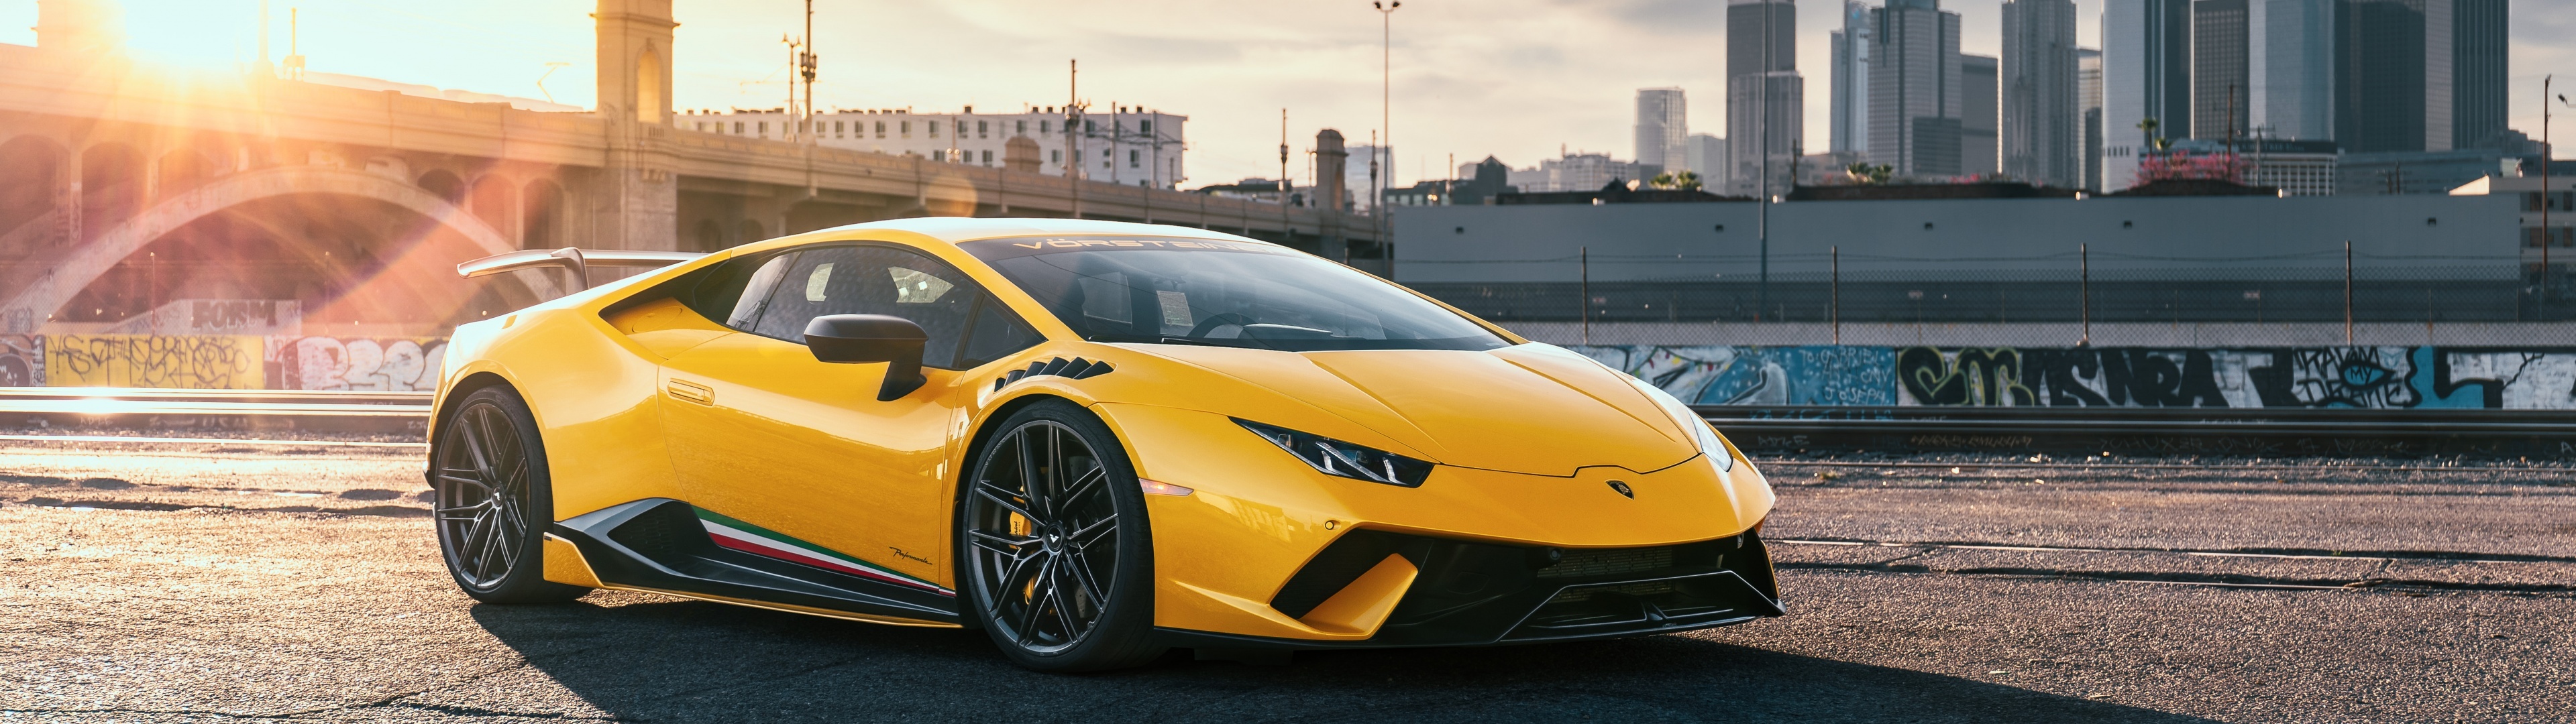 Lamborghini Huracan, Dual monitor marvel, Stunning visuals, Unprecedented beauty, 3840x1080 Dual Screen Desktop